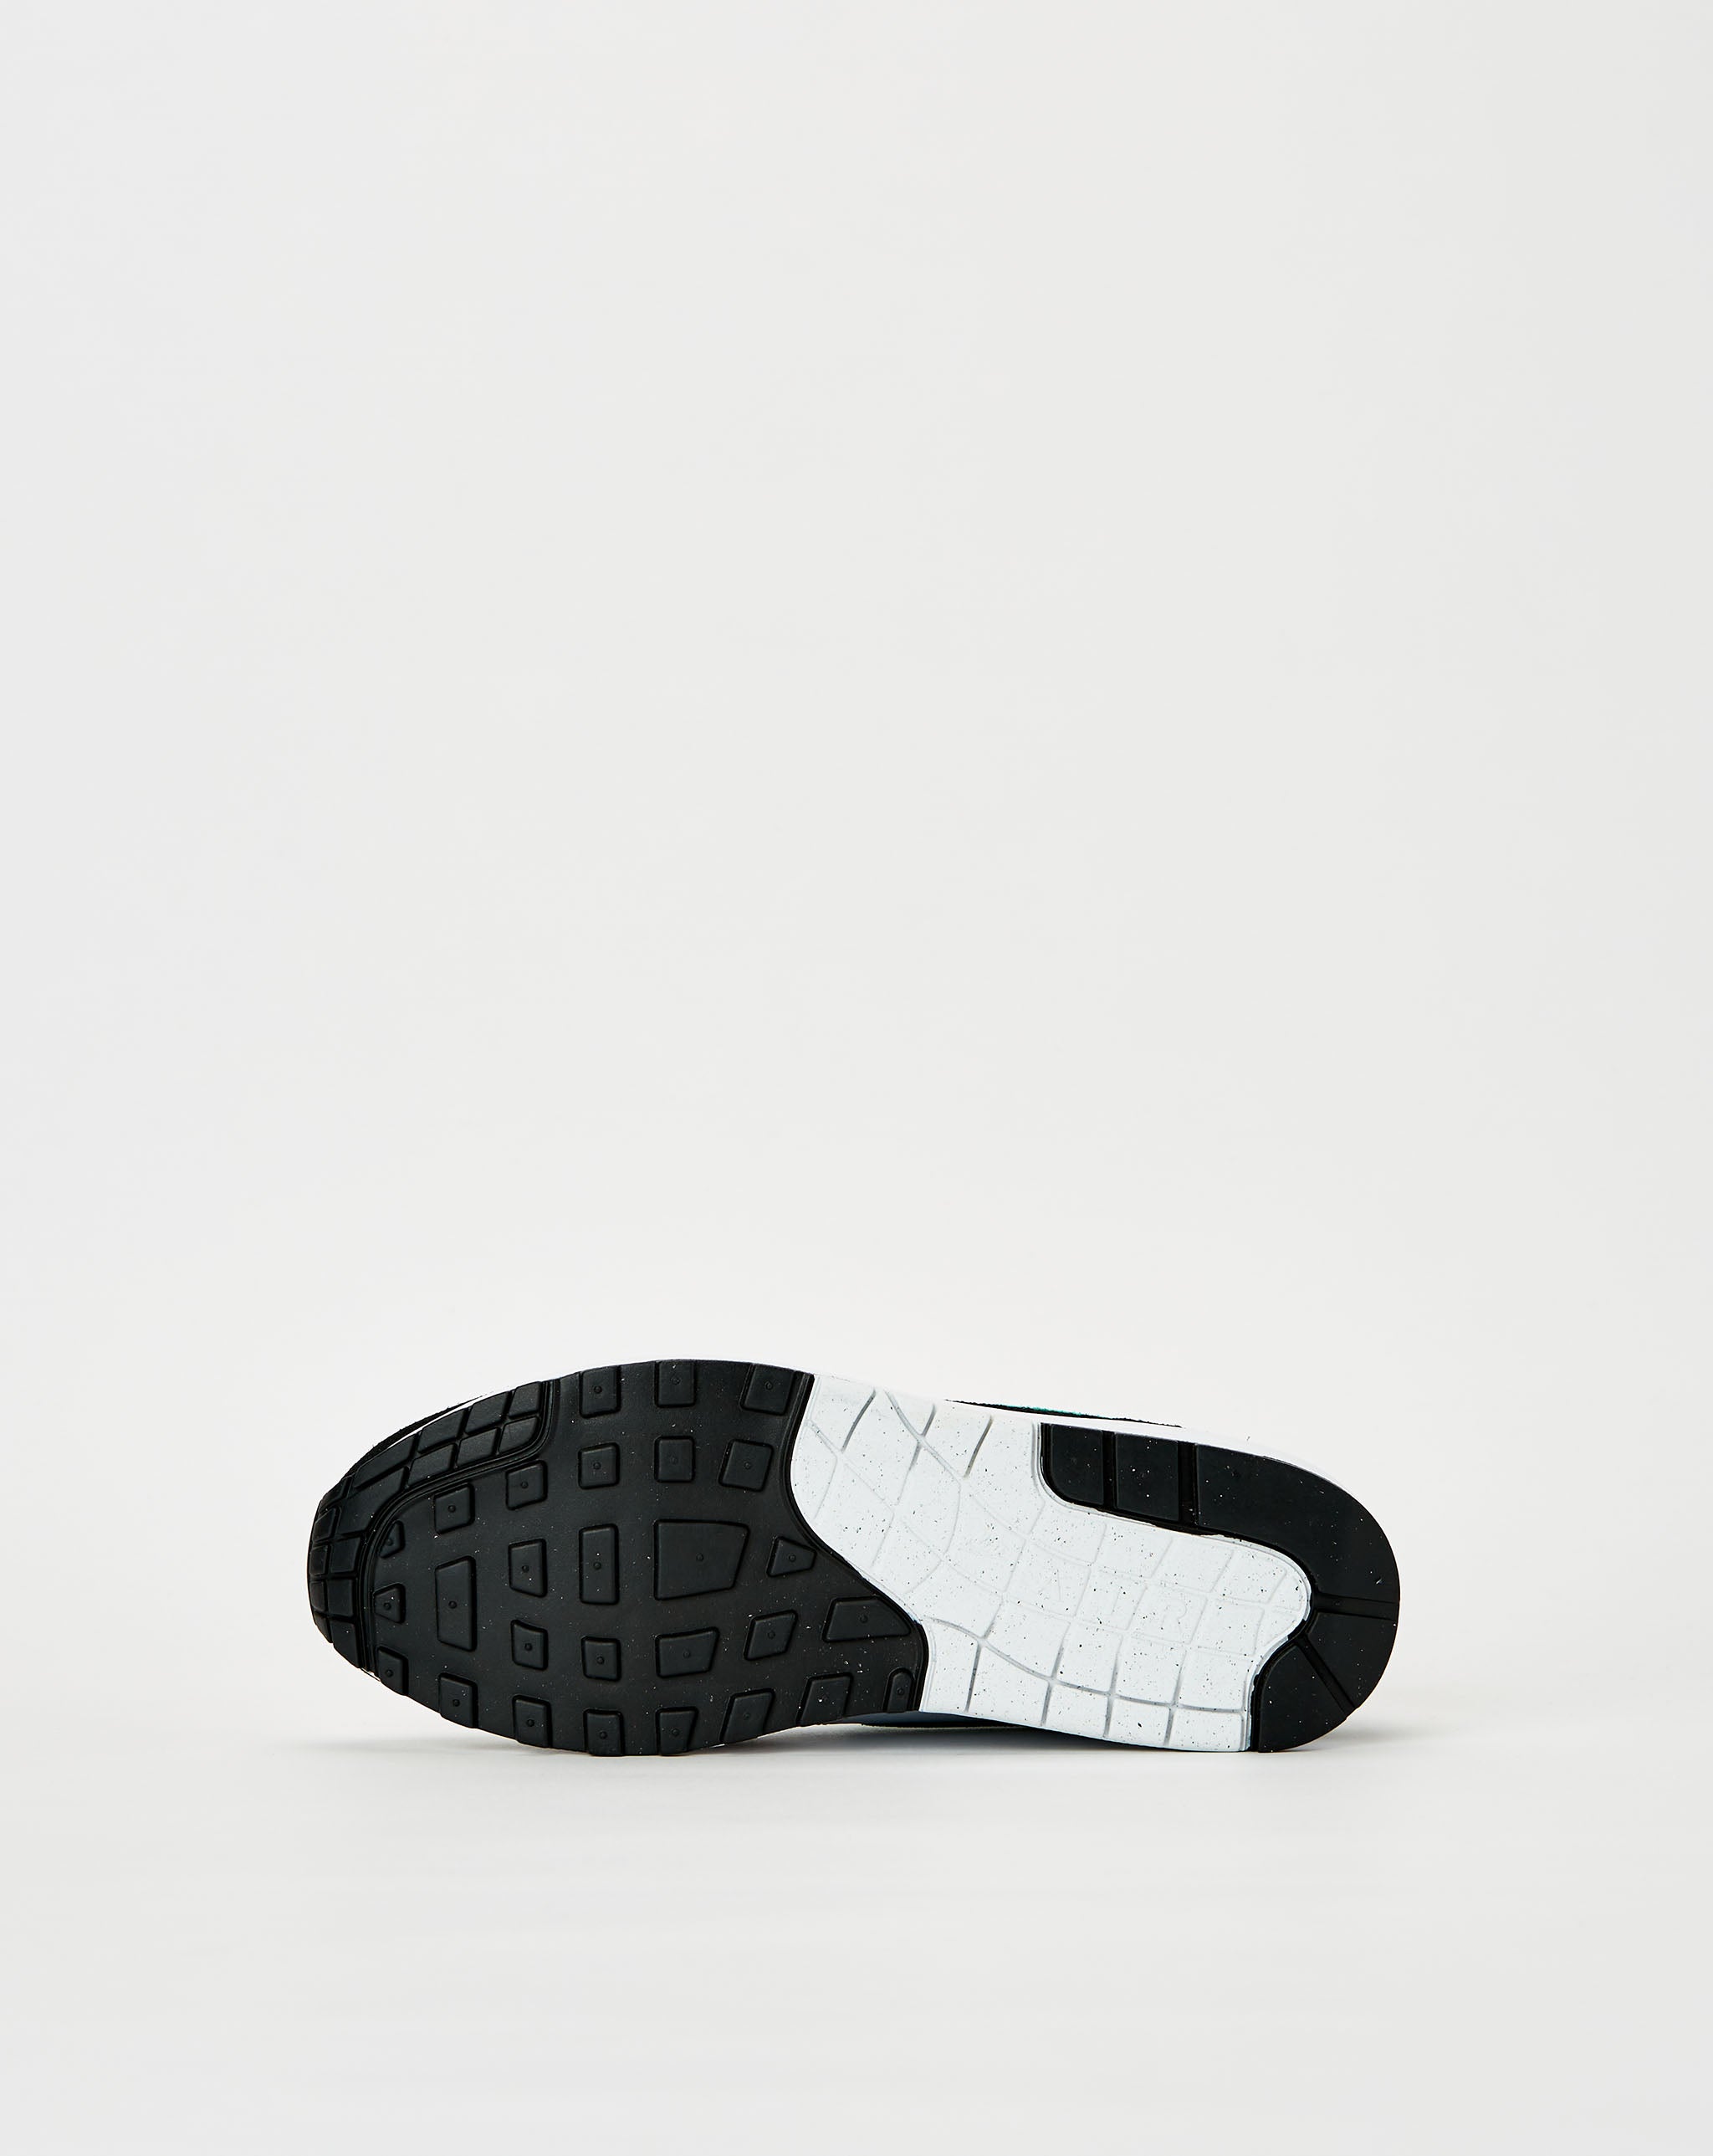 Nike zapatillas de running Salomon gore-tex talla 46  - Cheap Urlfreeze Jordan outlet